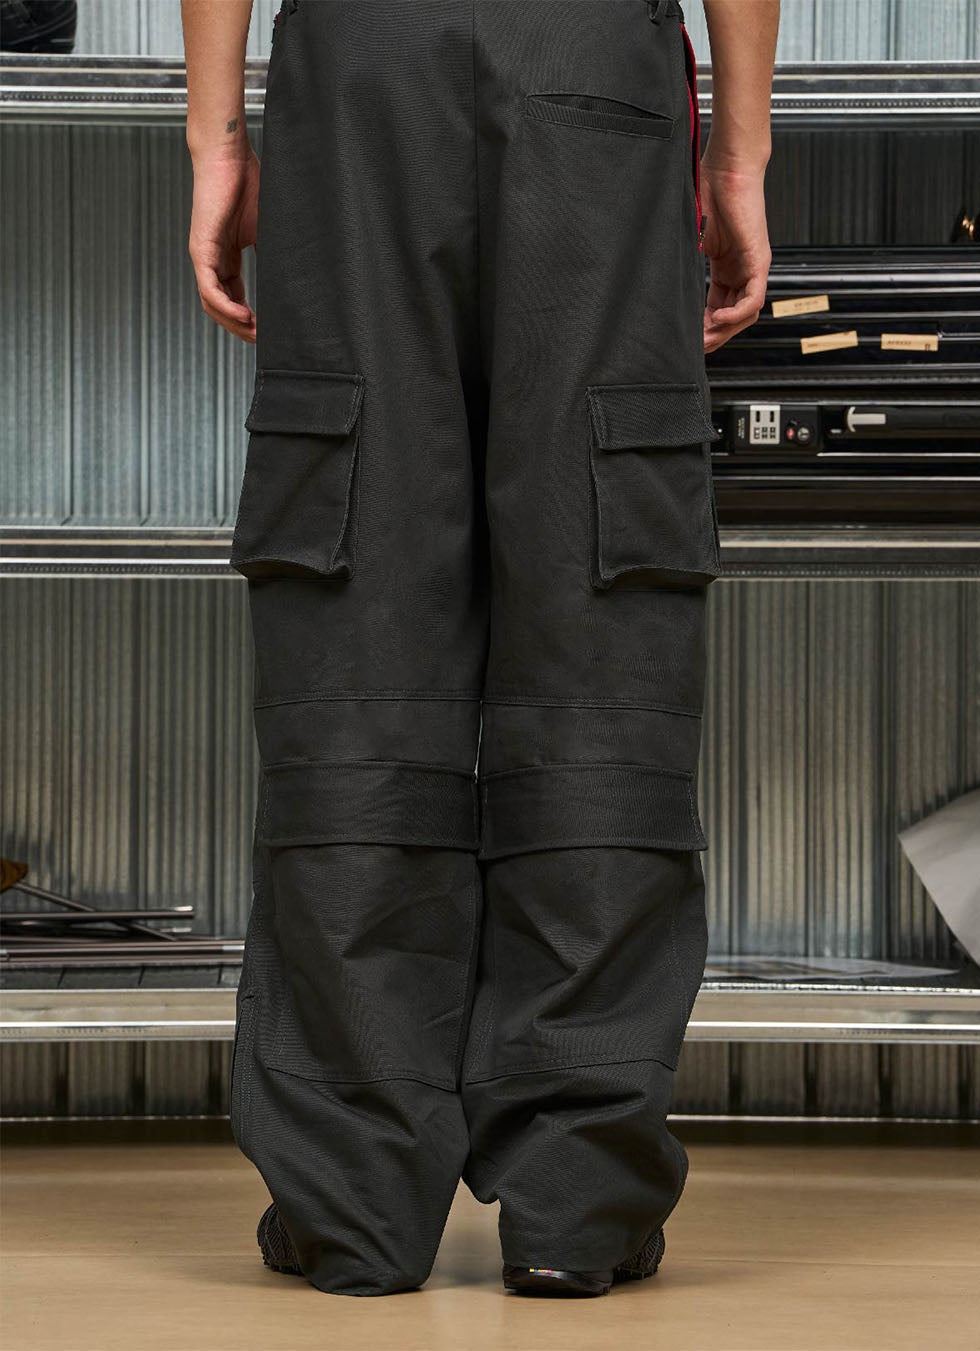 Multi-pocket cargo pants with contrast zipper